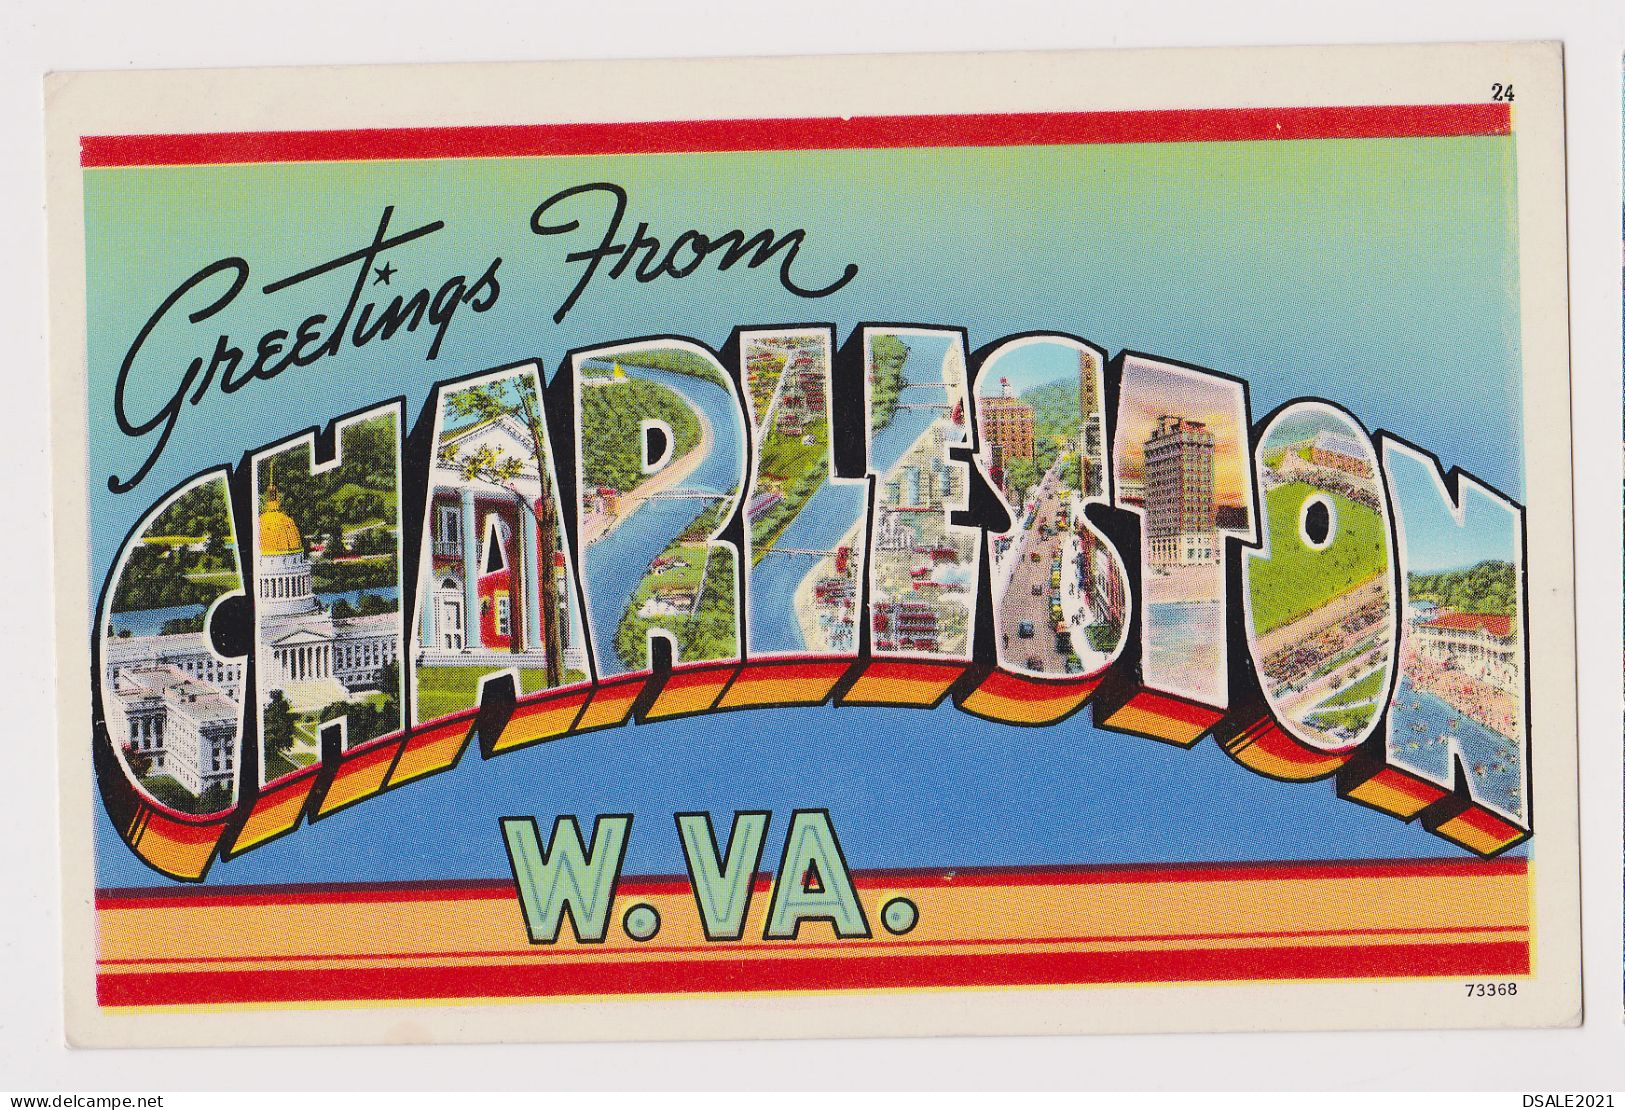 USA United States Greetings From CHARLESTON W.VA. Vintage 1960s Photo Postcard RPPc AK (42373) - Charleston